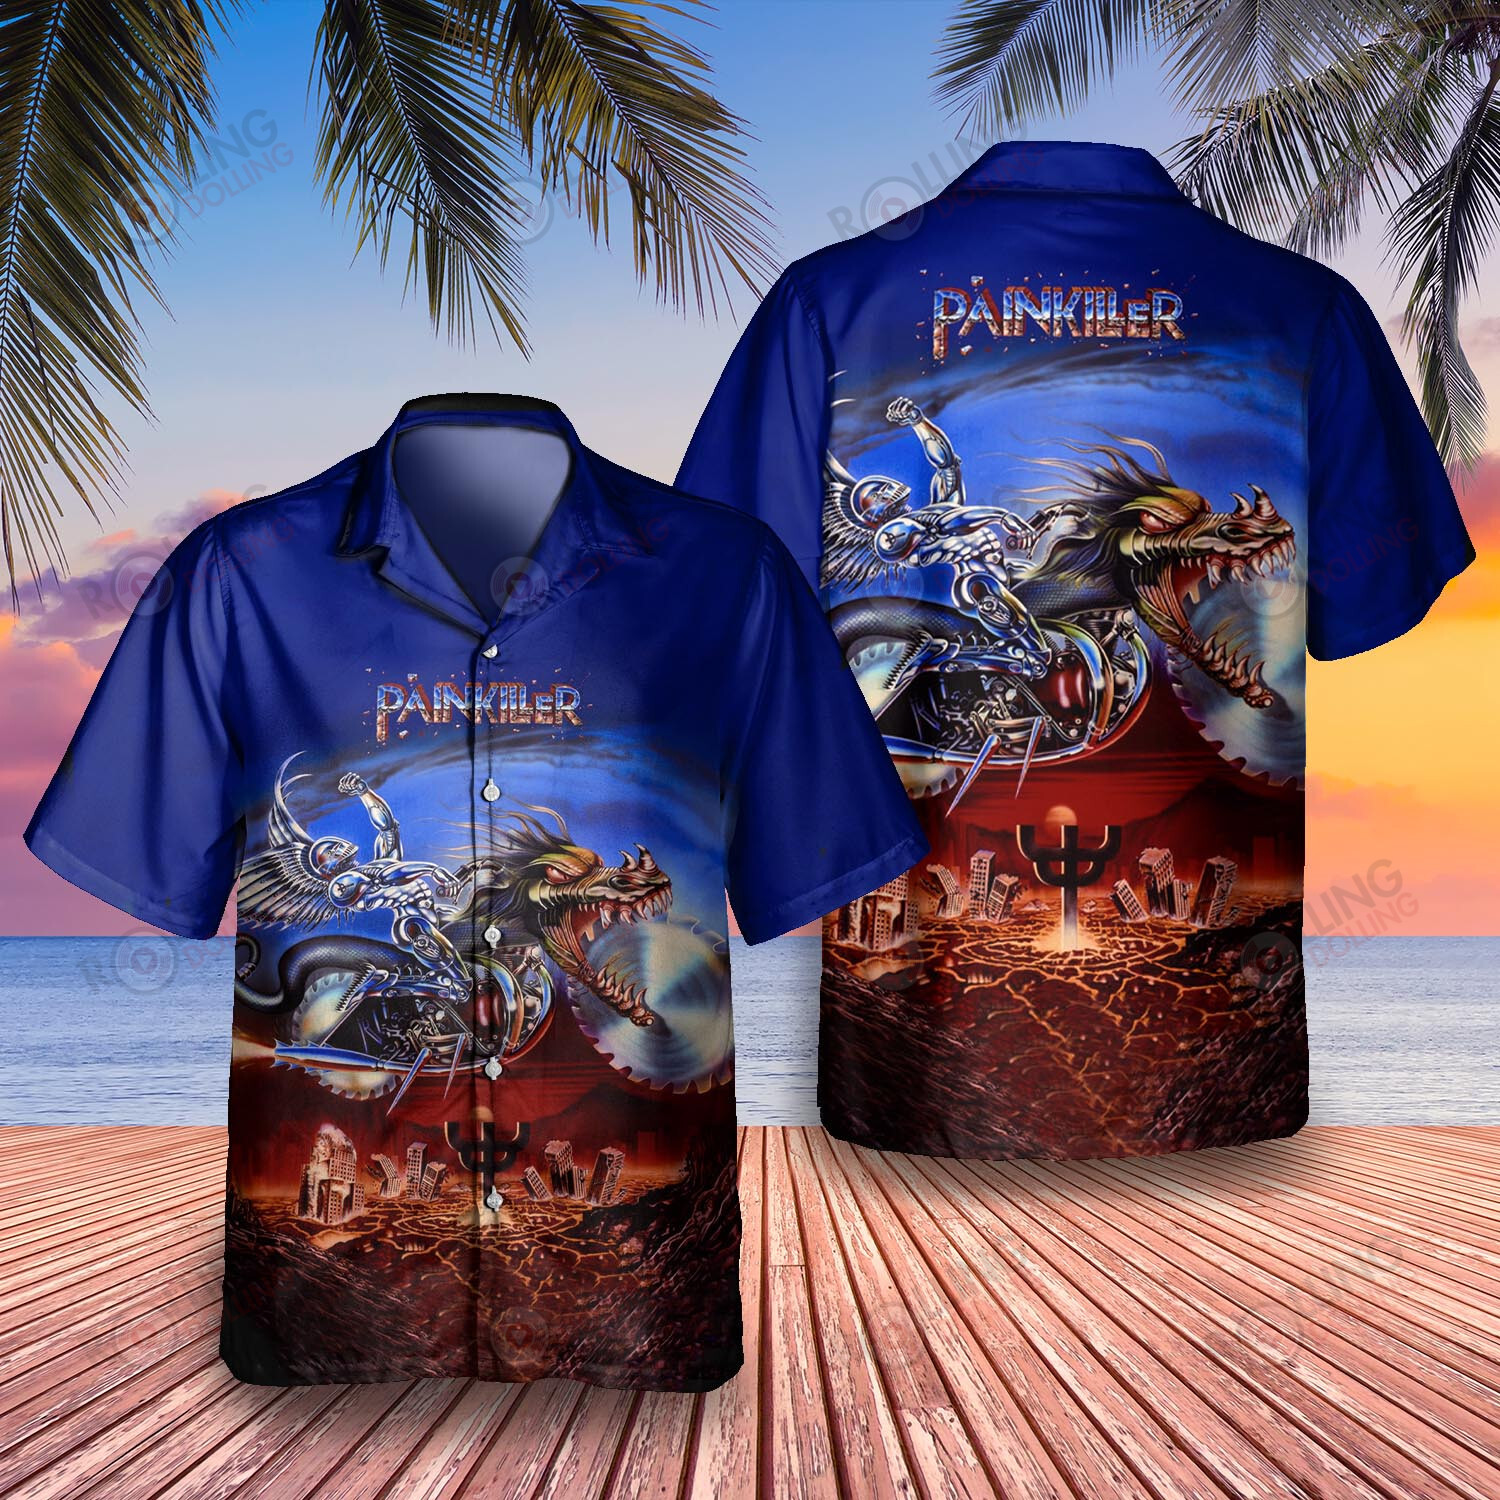 Regardless of their style, you will feel comfortable wearing Hawaiian Shirt 30